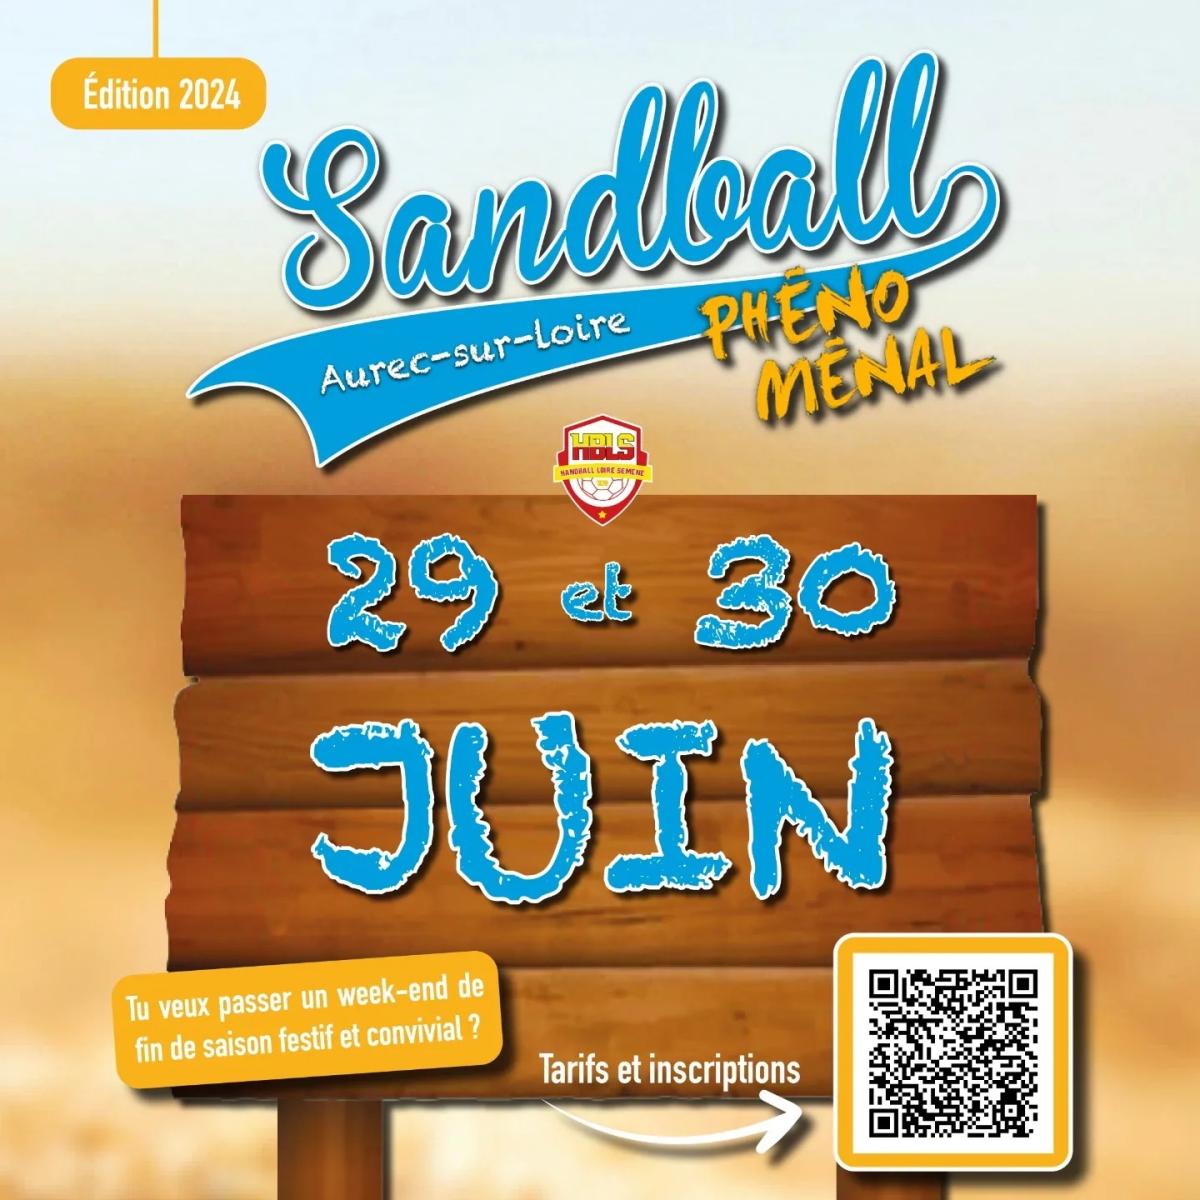 Tournoi de Sandball